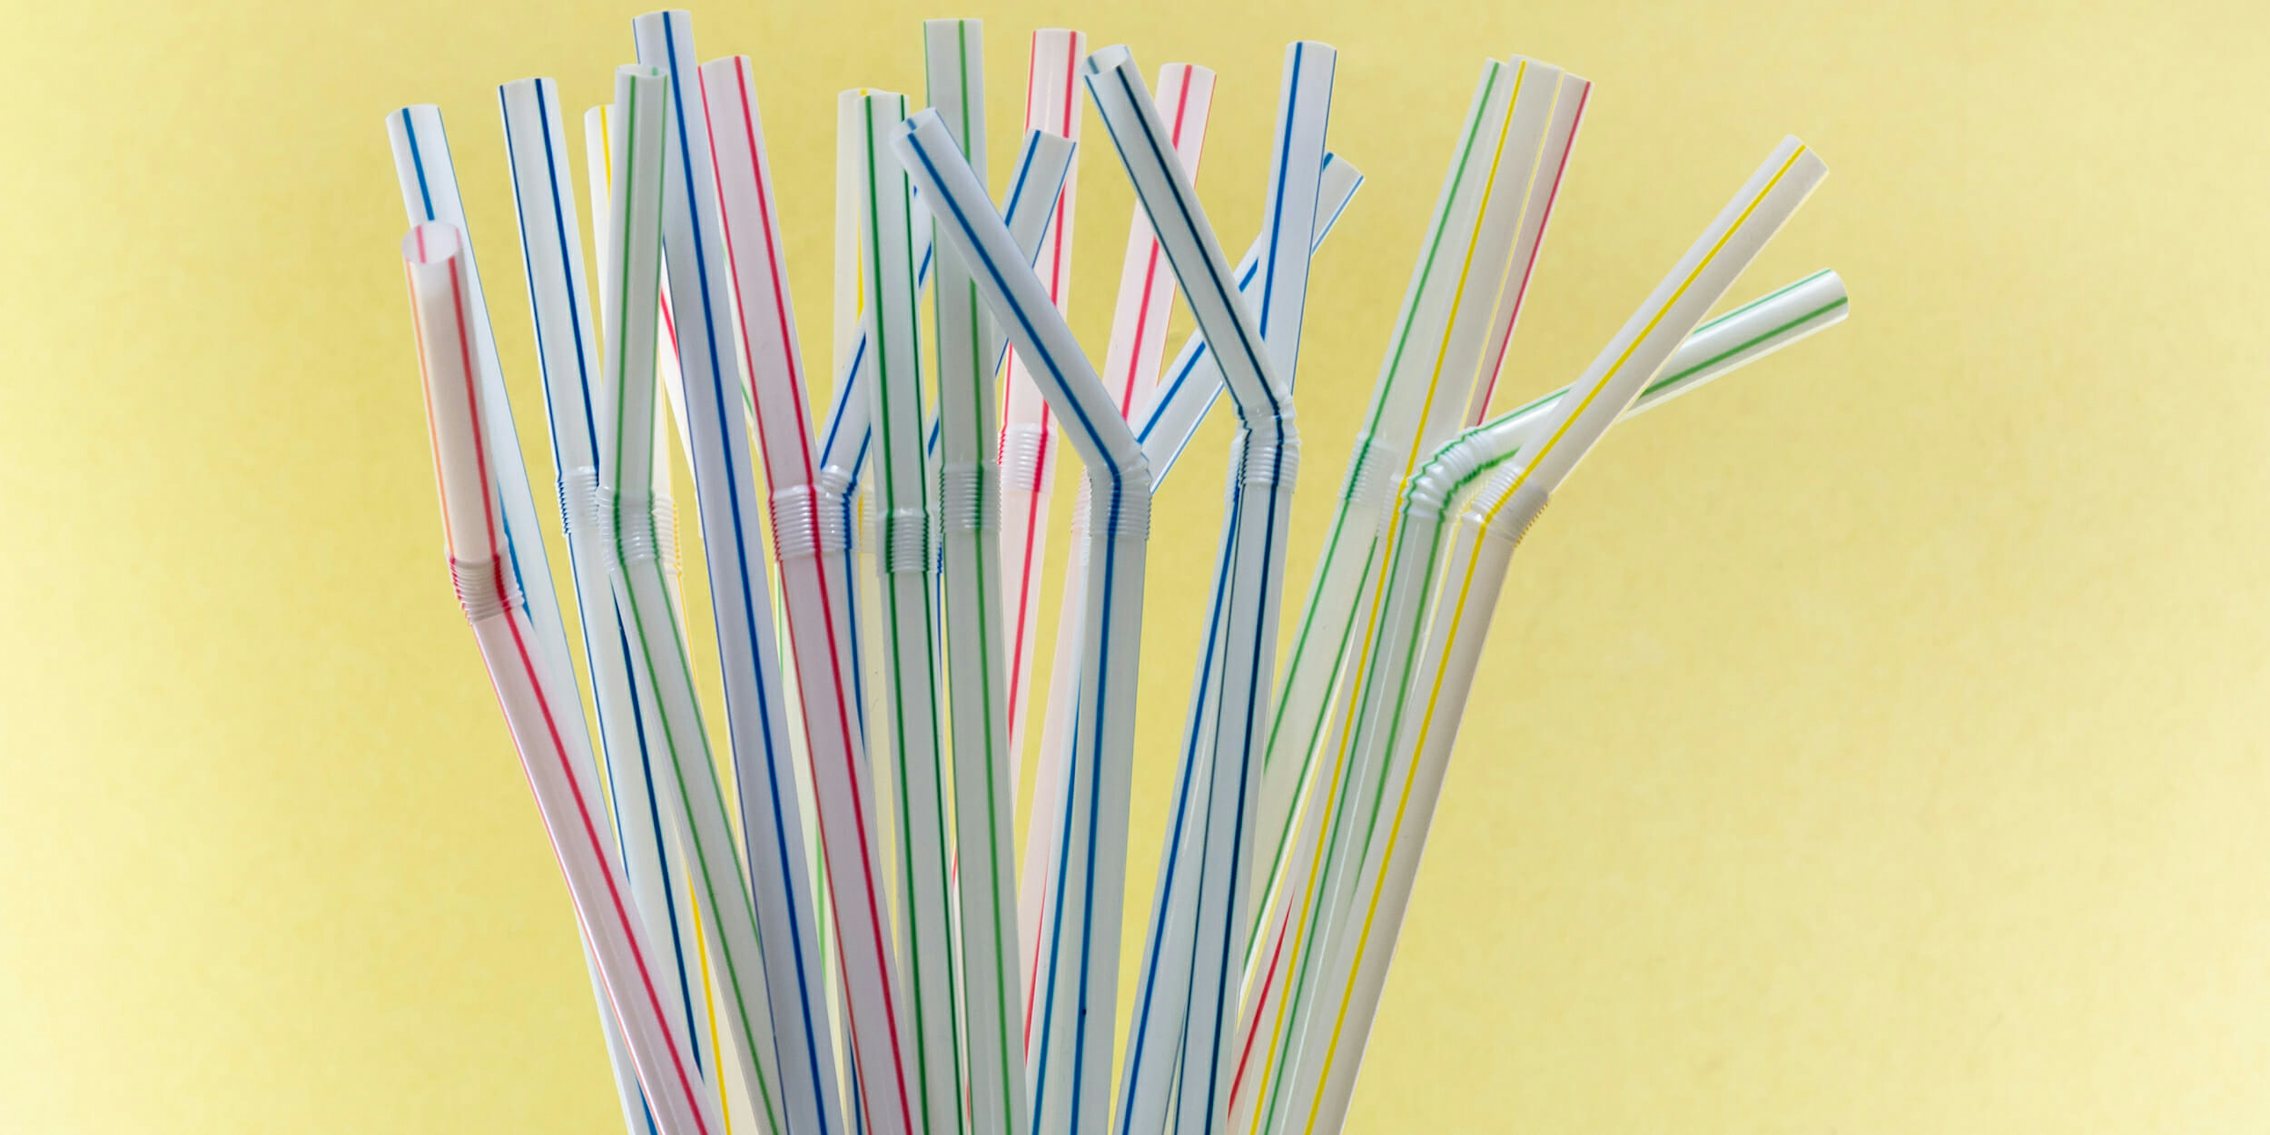 plastic straws